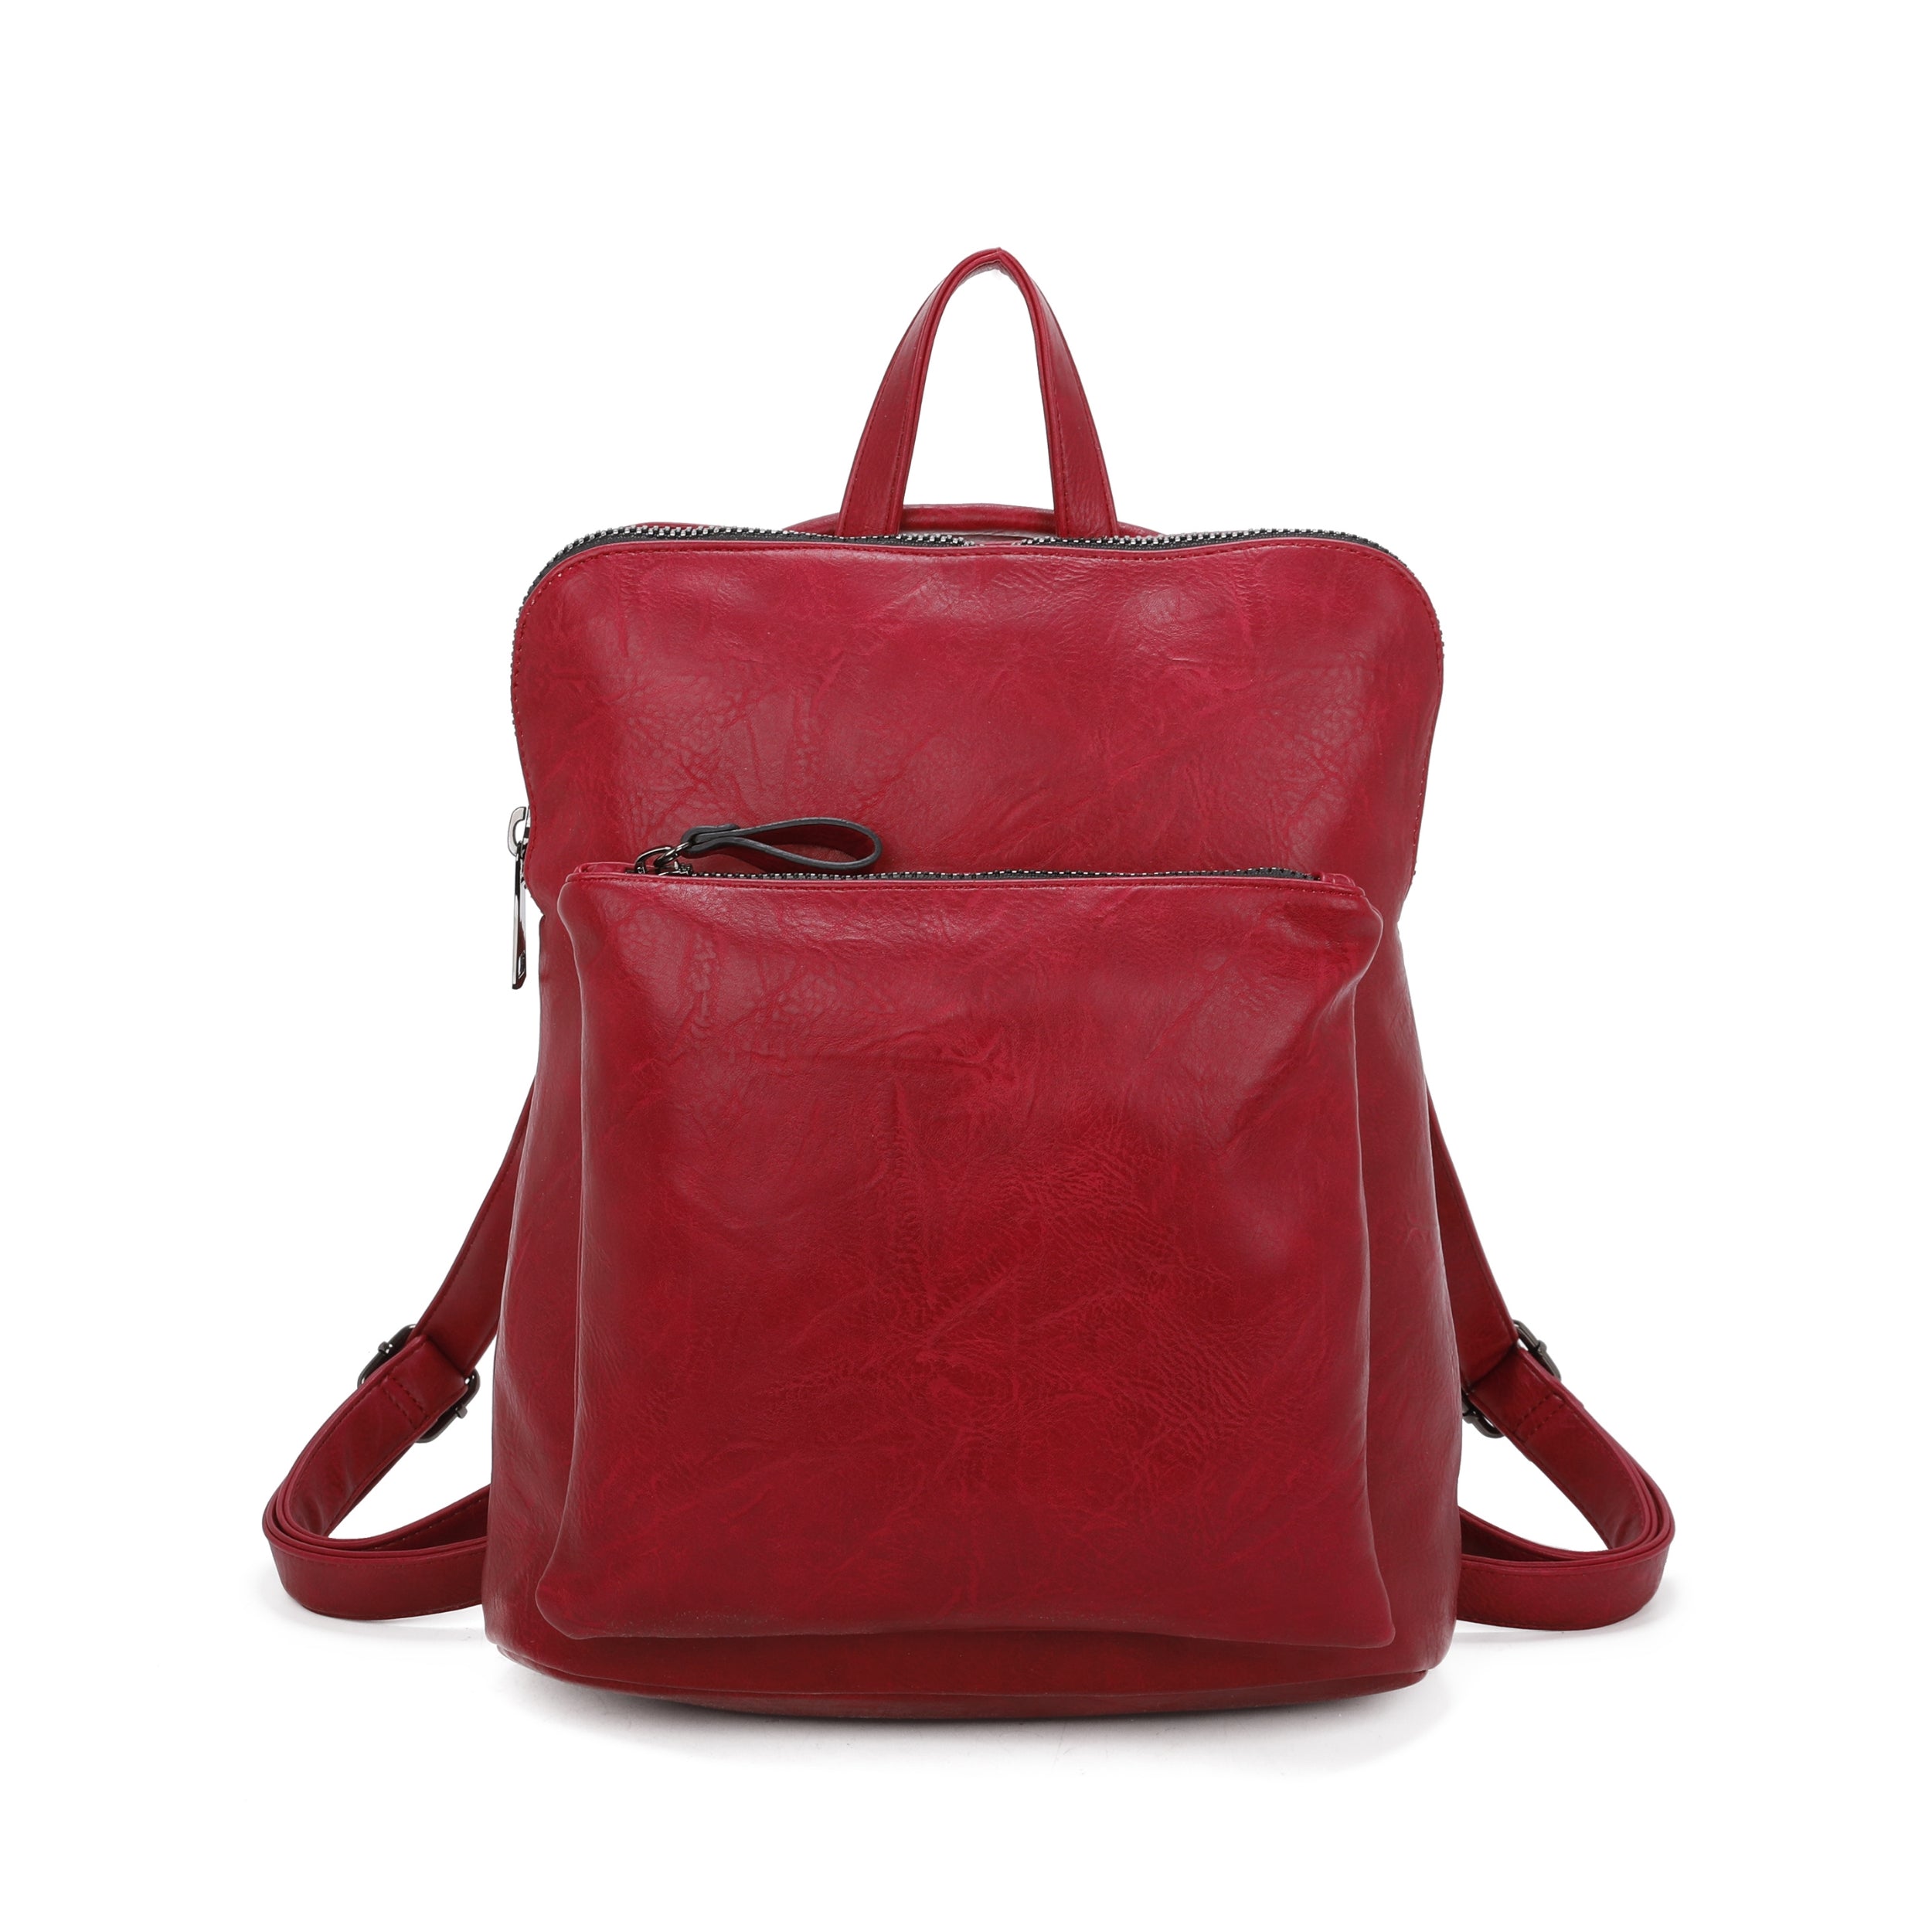 Craze London Grab handle Backpack with Zip Closure